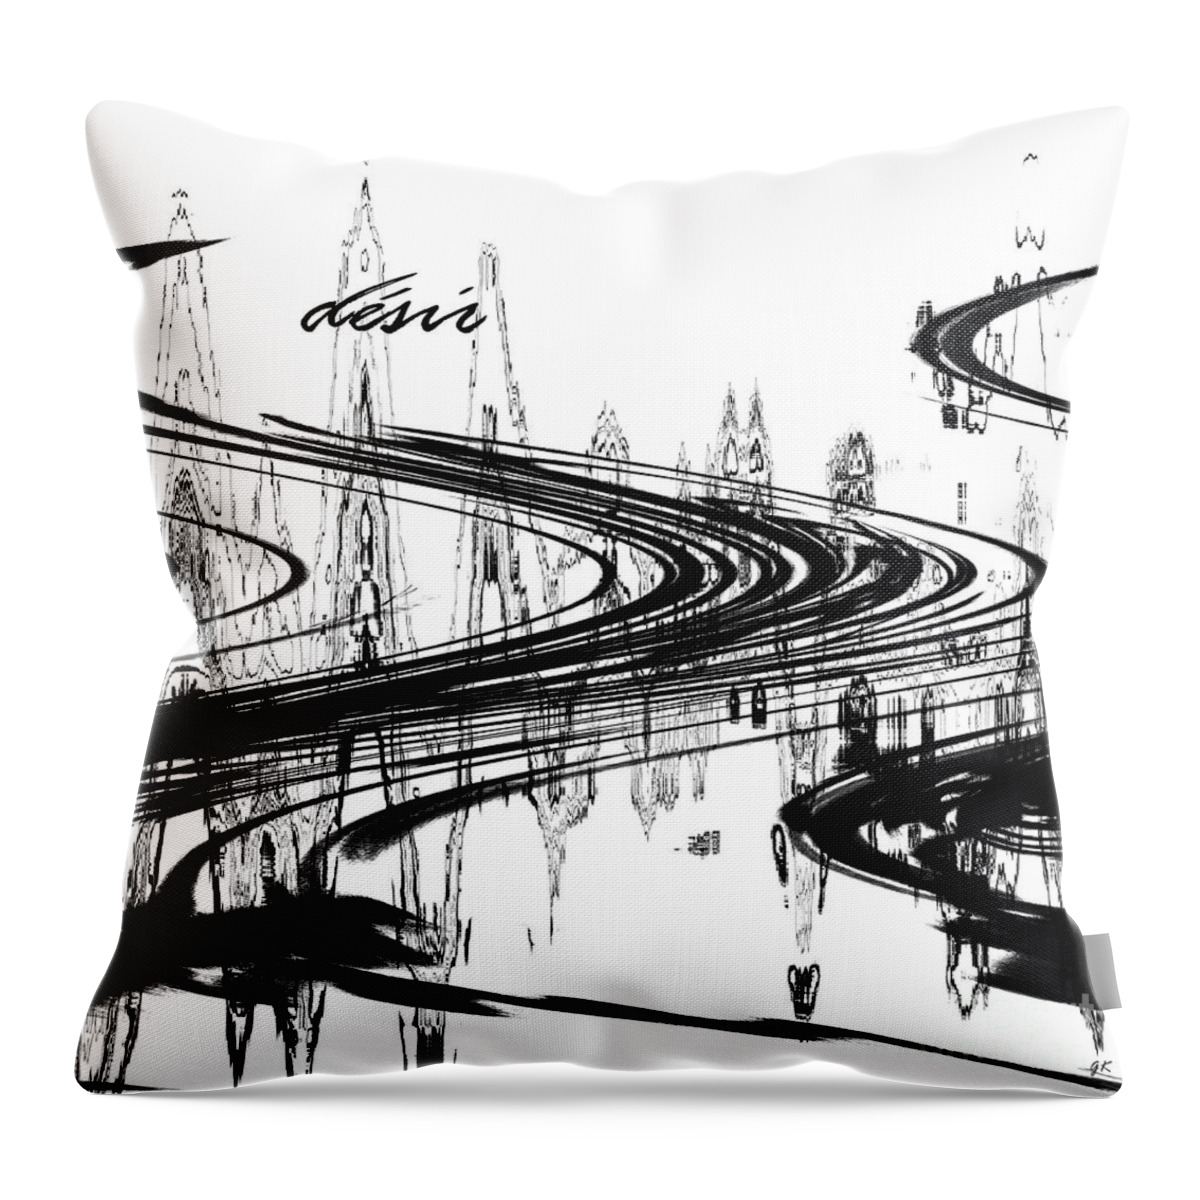  Throw Pillow featuring the digital art Desir by Gerlinde Keating - Galleria GK Keating Associates Inc